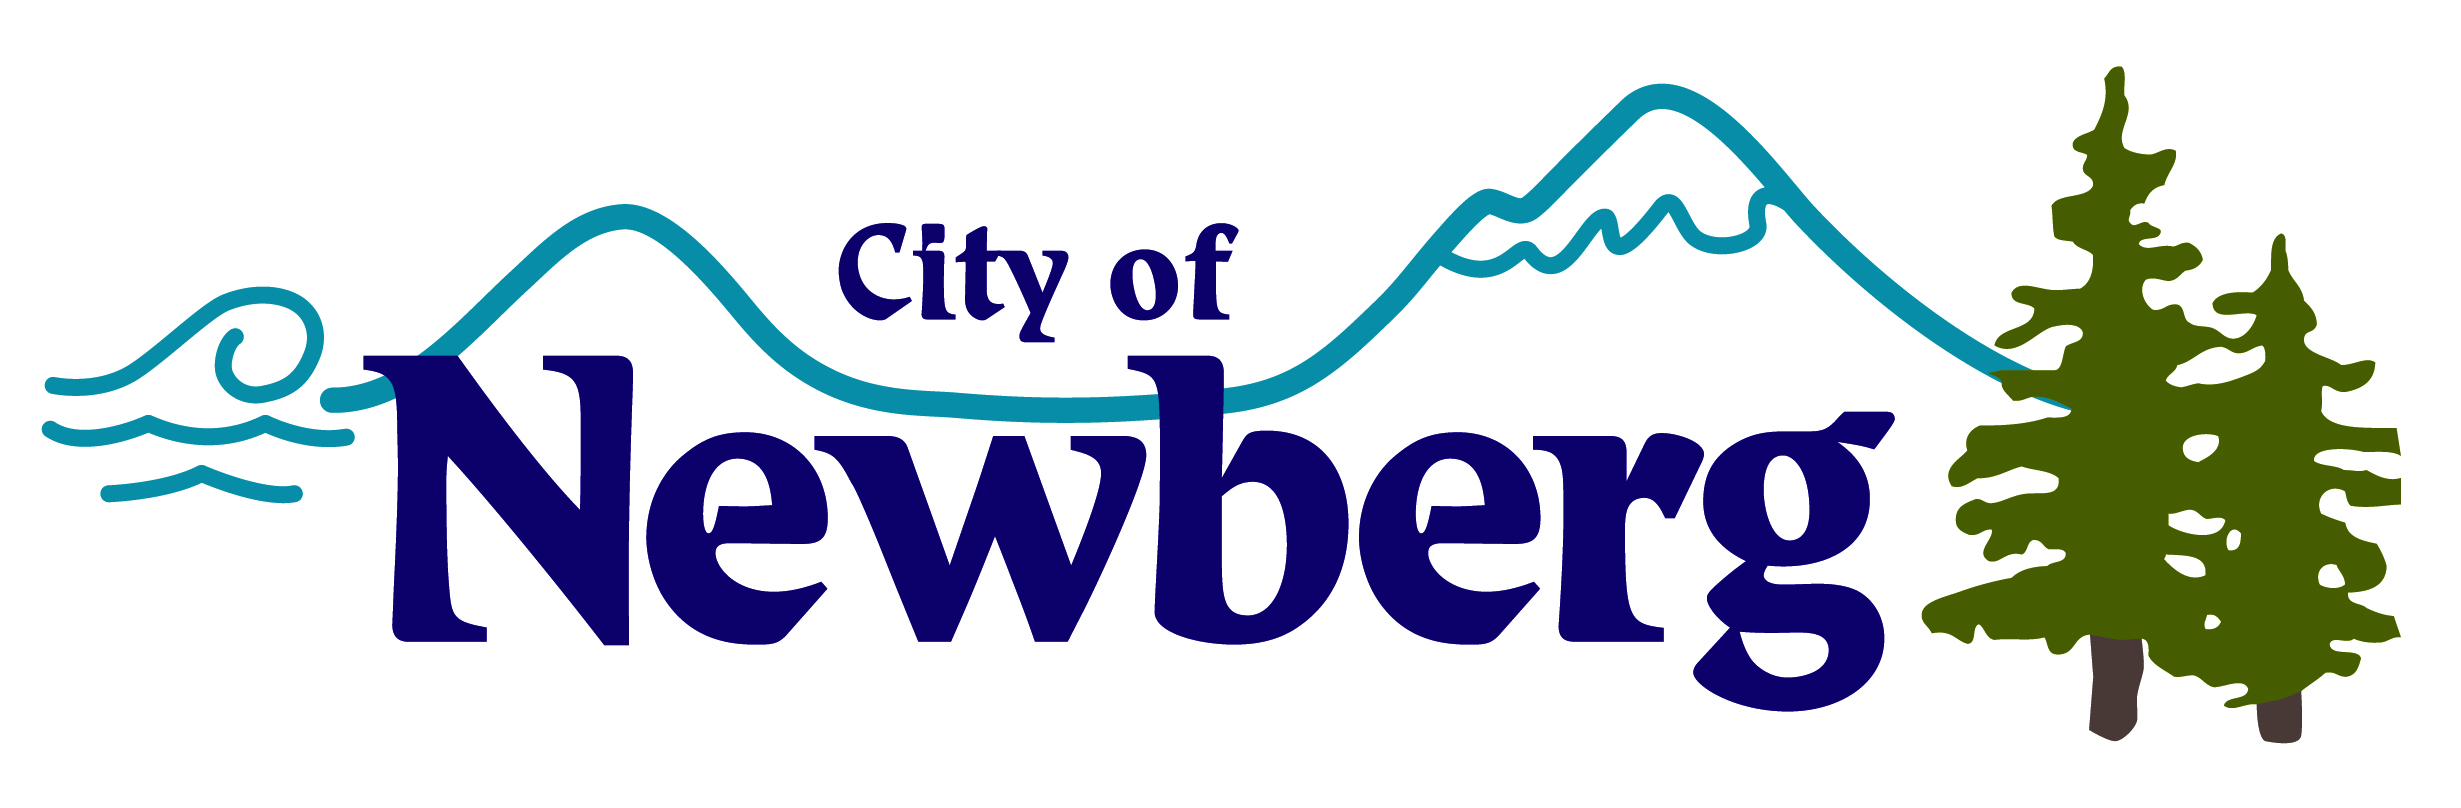 Newbeeg - City of Newberg news via FlashAlert.Net